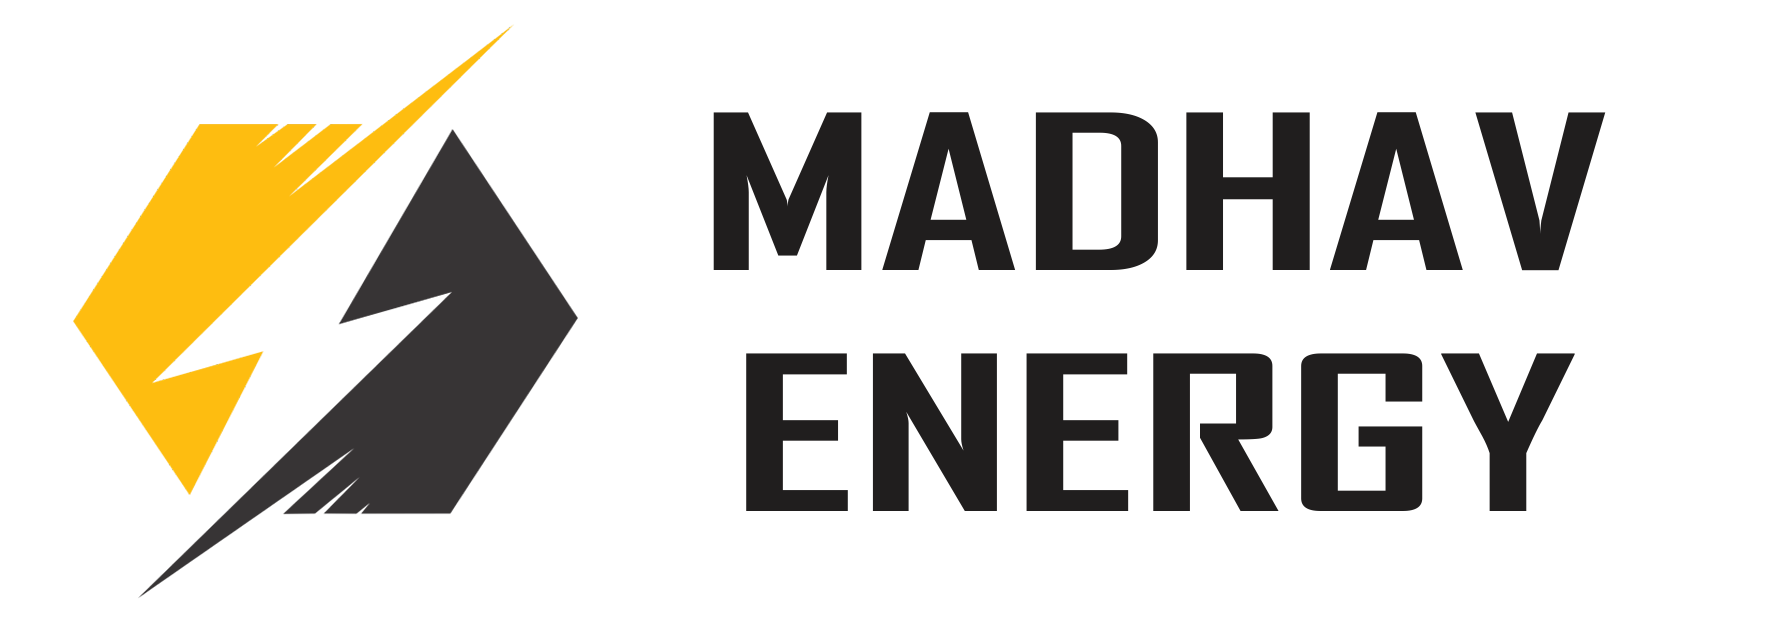 Madhav Energy Logo